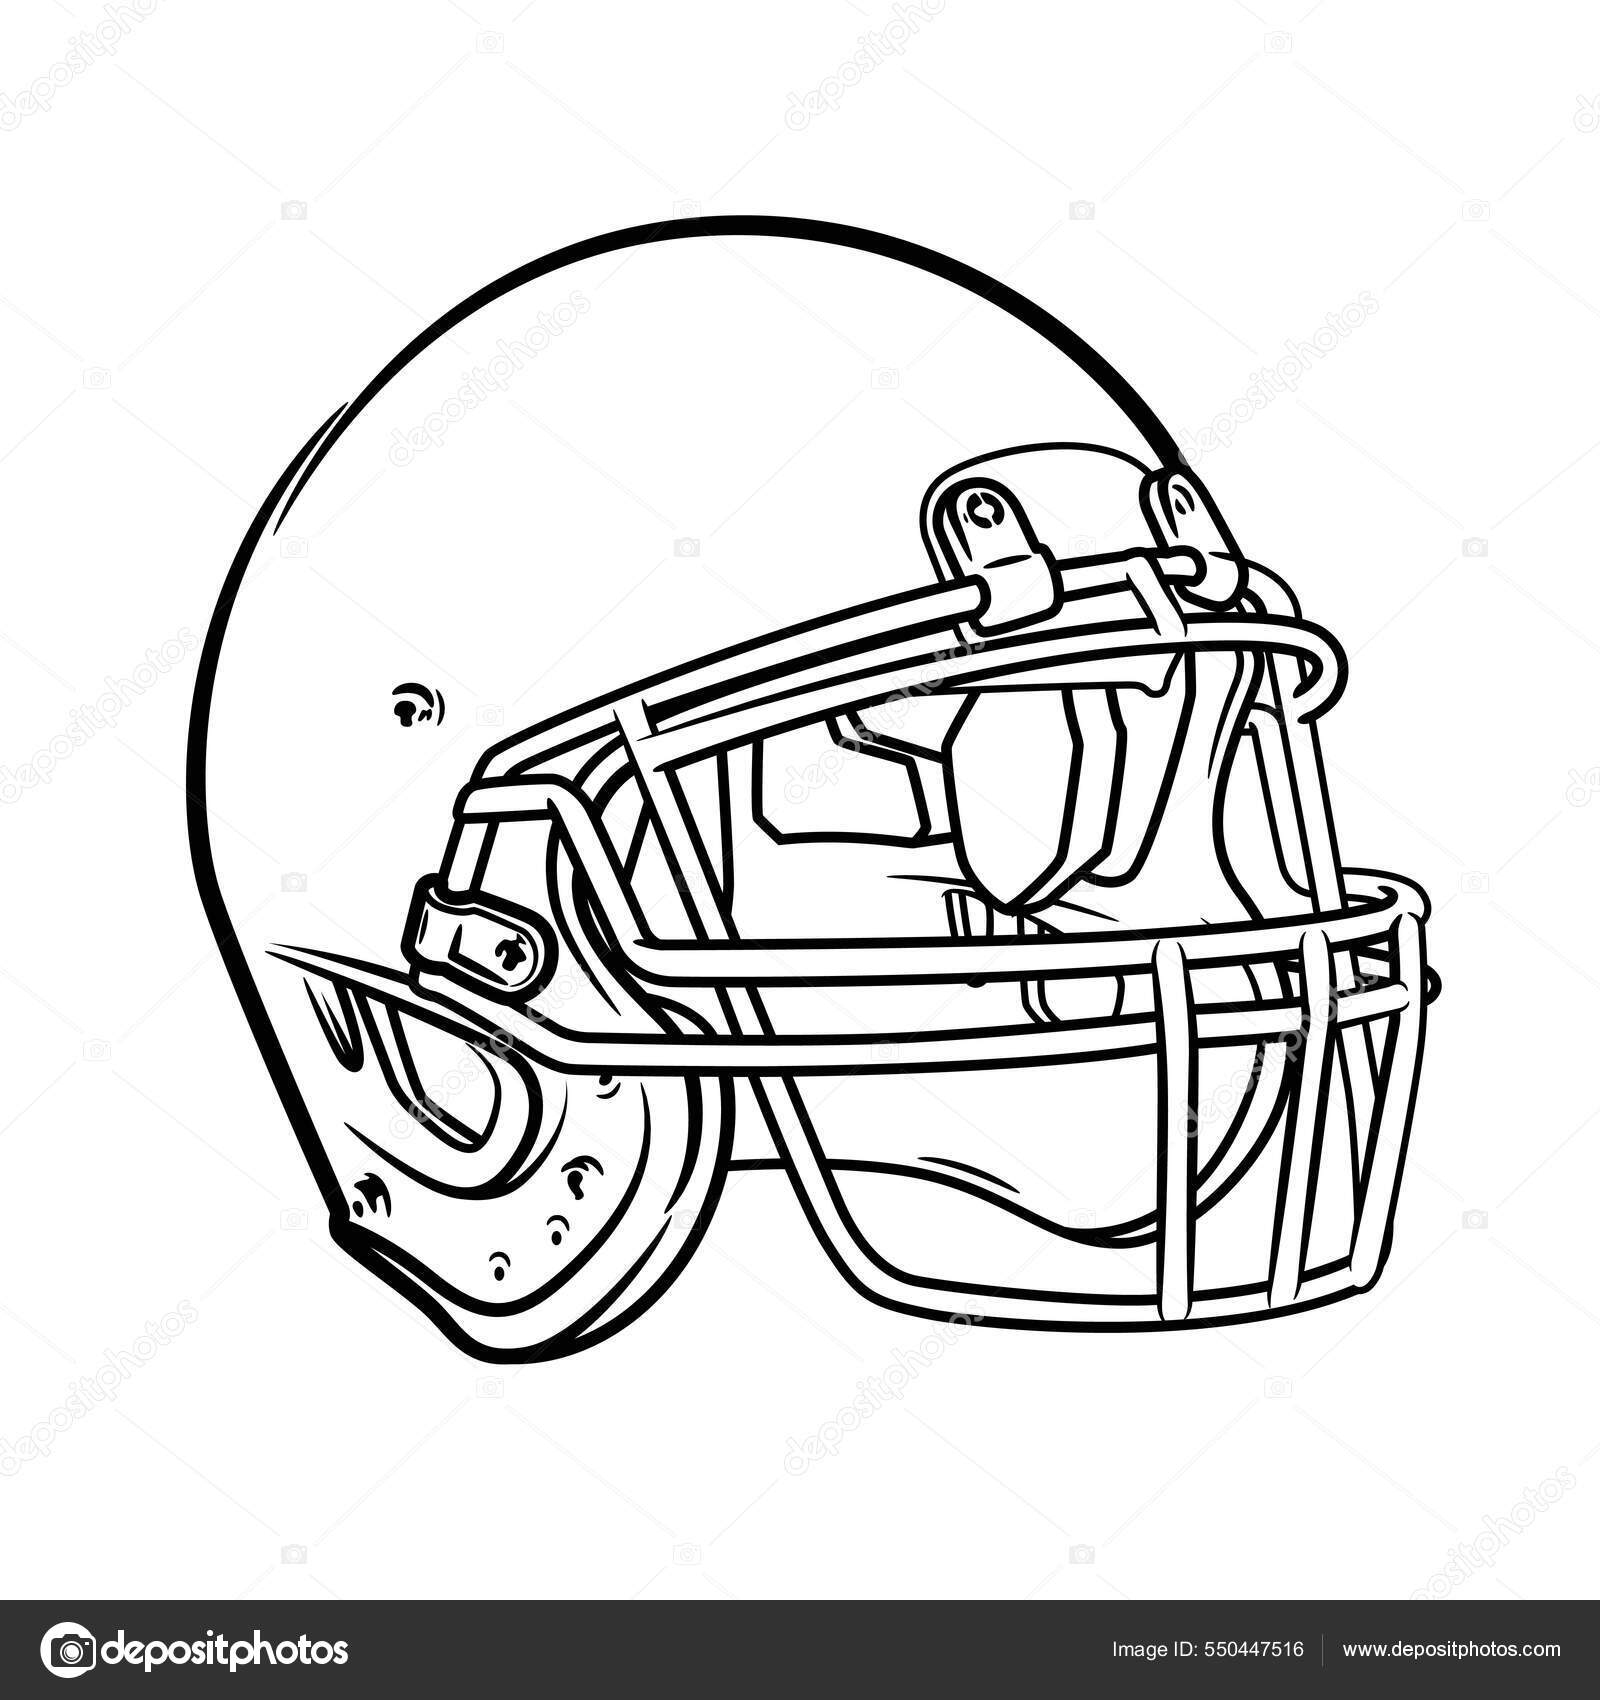 Logotipo de casco de fútbol americano diseño deportivo monocromático